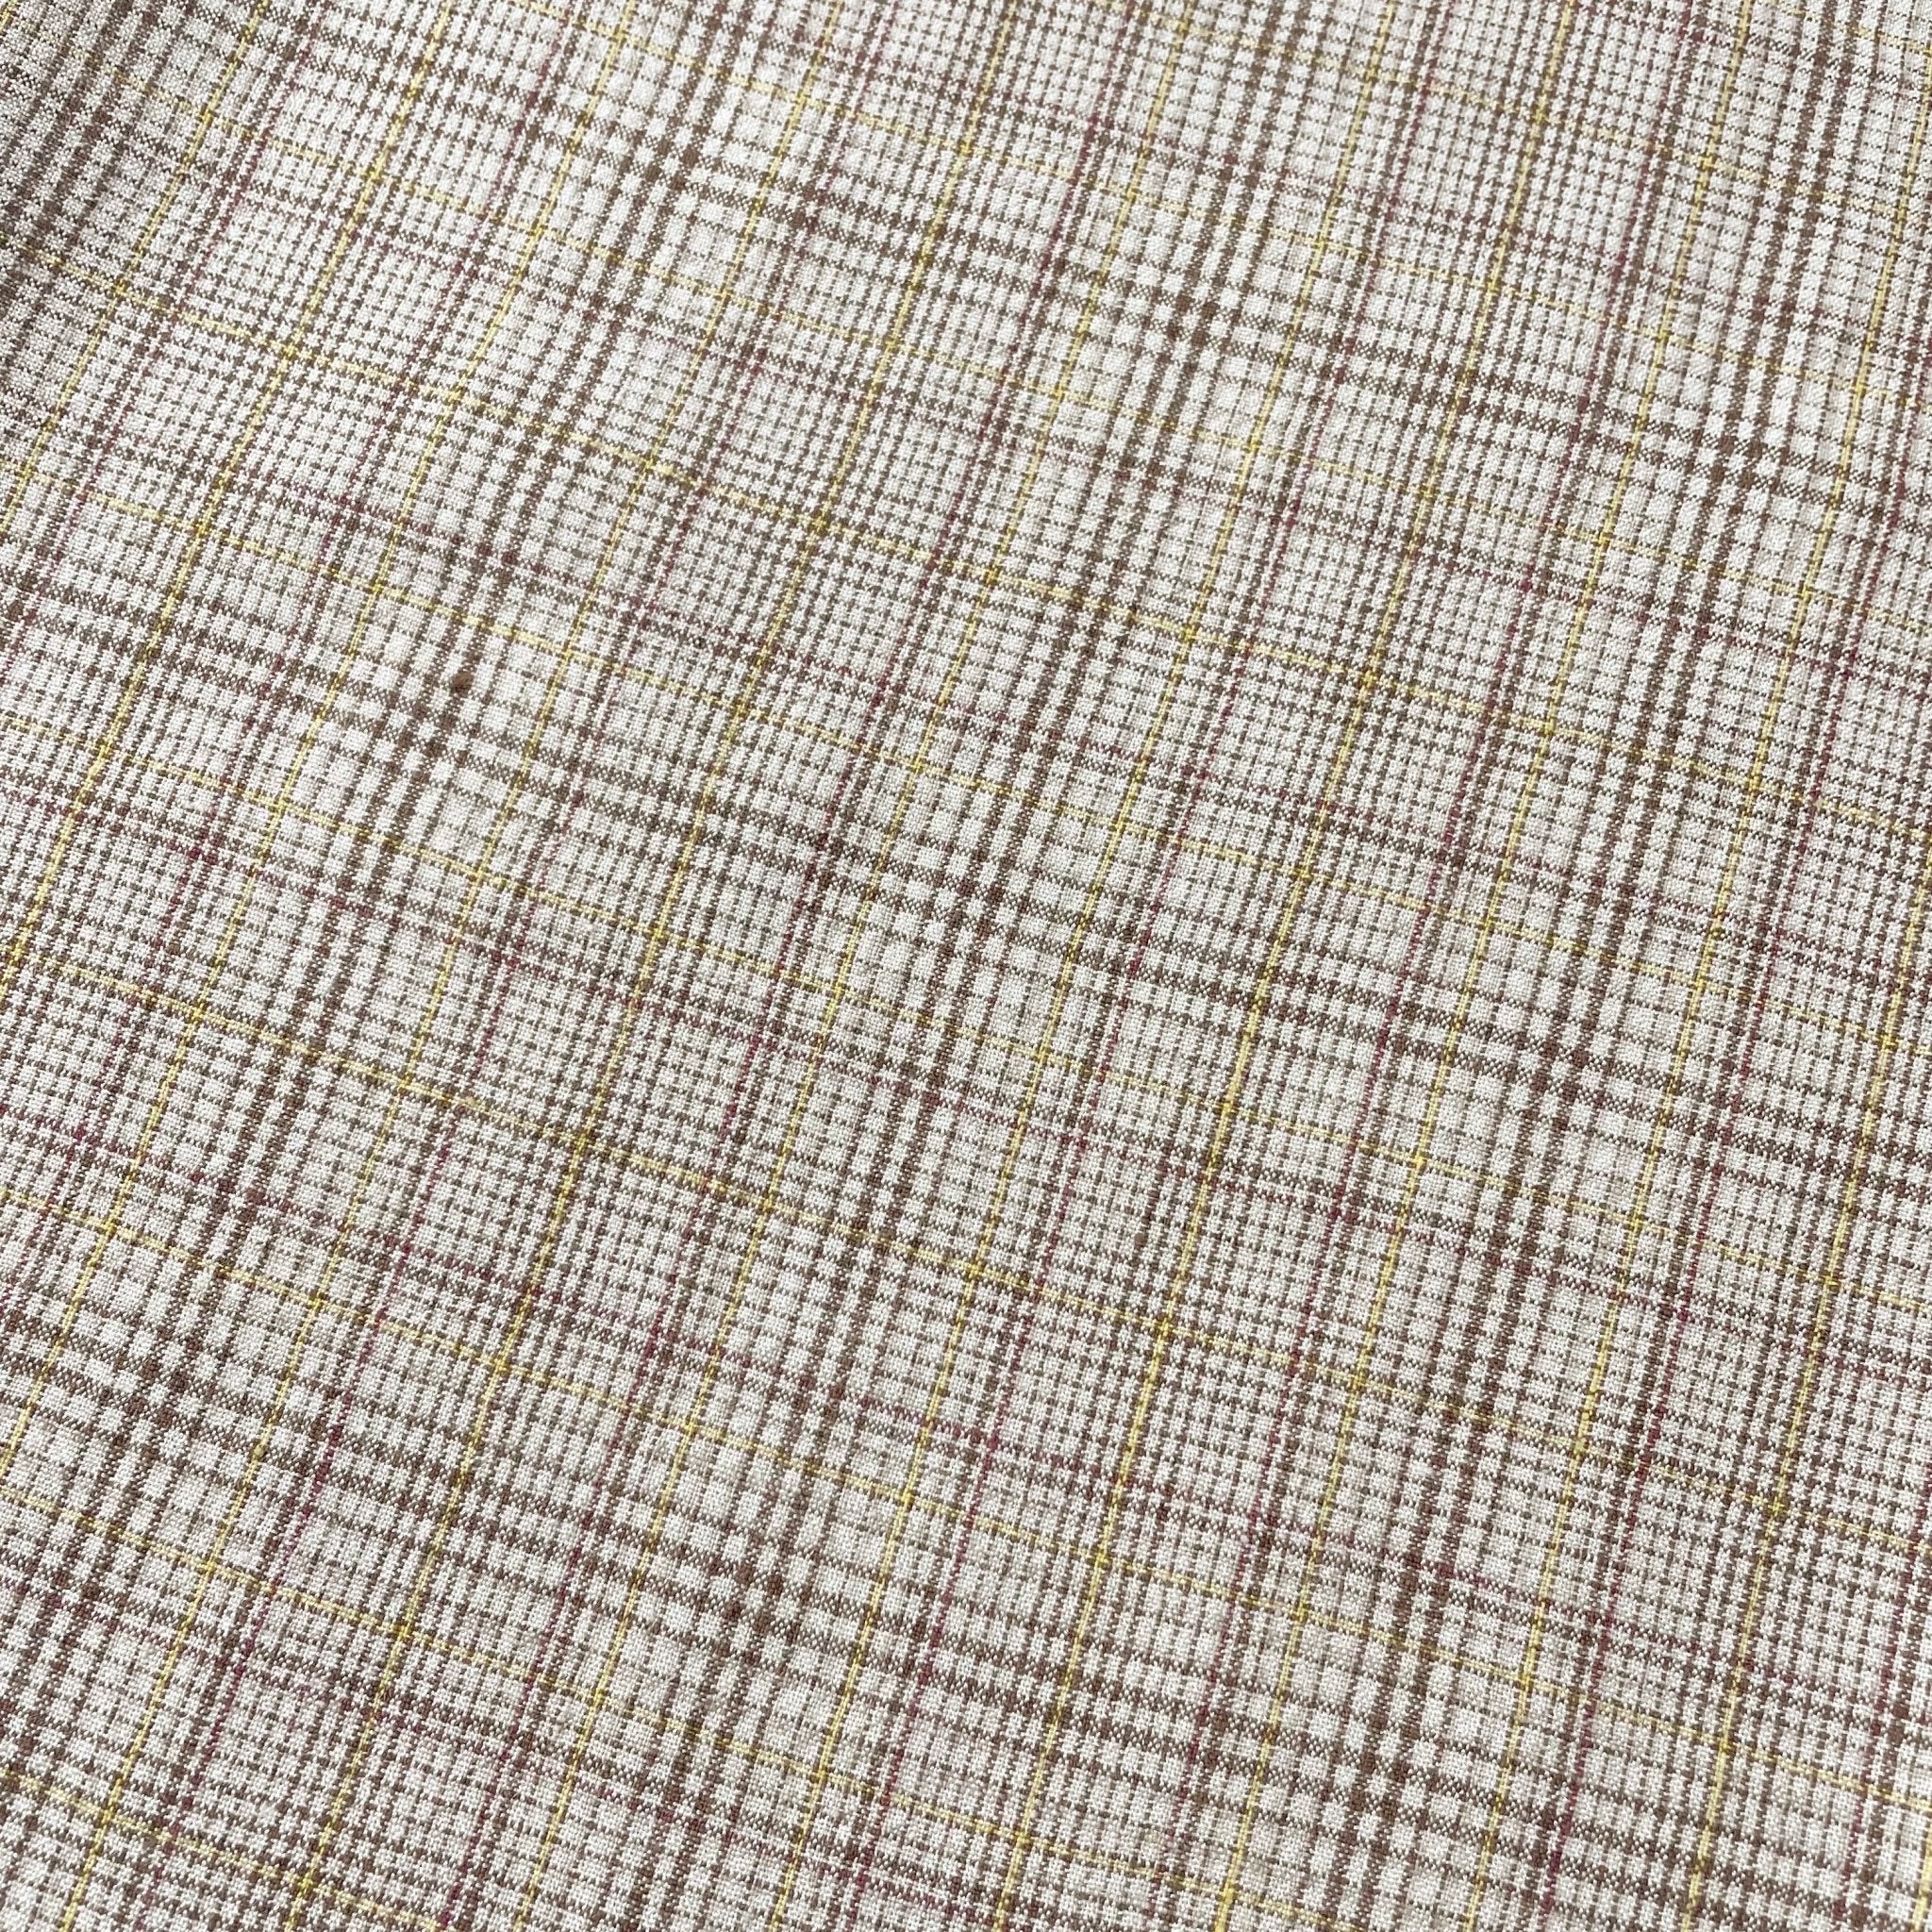 Linen Rayon Cotton Check Fabric 7377 - The Linen Lab - 7377 CHECK